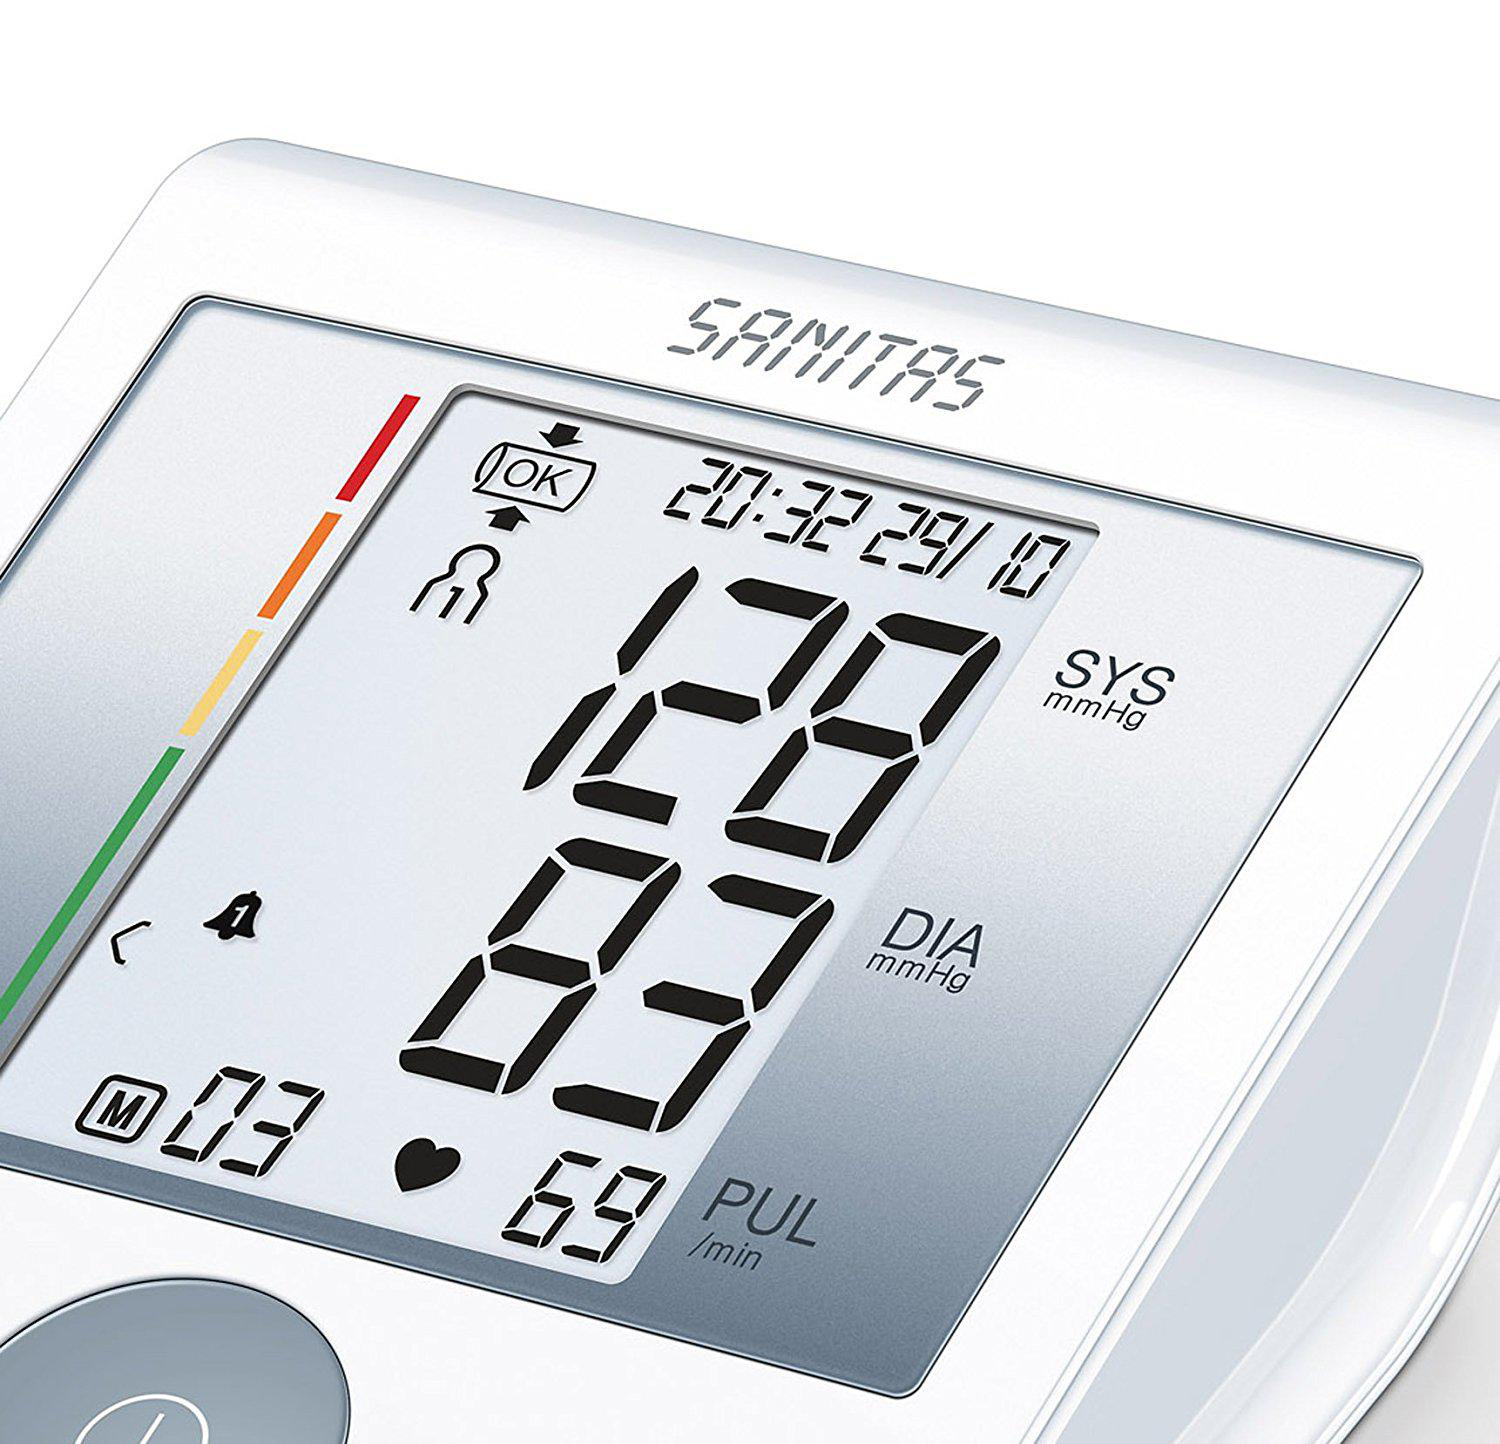 SANITAS 658.25 SBM 22 Blutdruckmessgerät